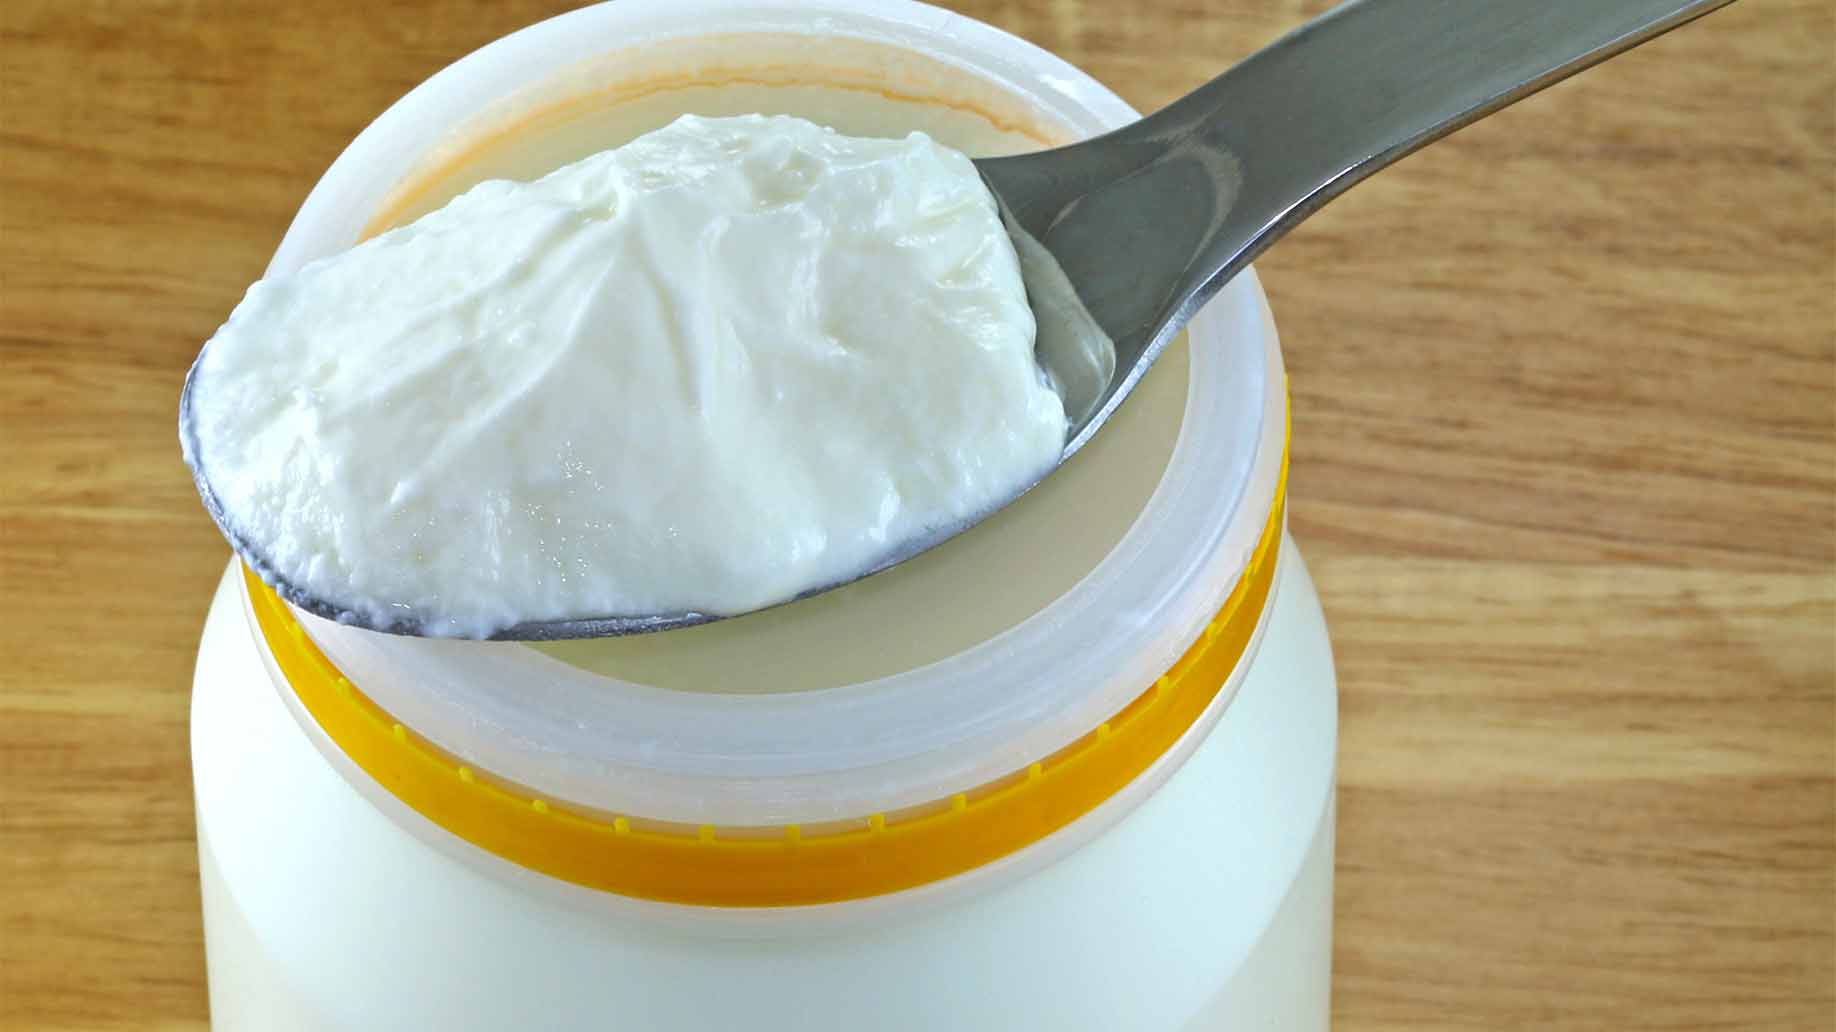 probiotics colon cleanse detox remove toxins naturally fresh white yogurt unflavored live good bacteria 